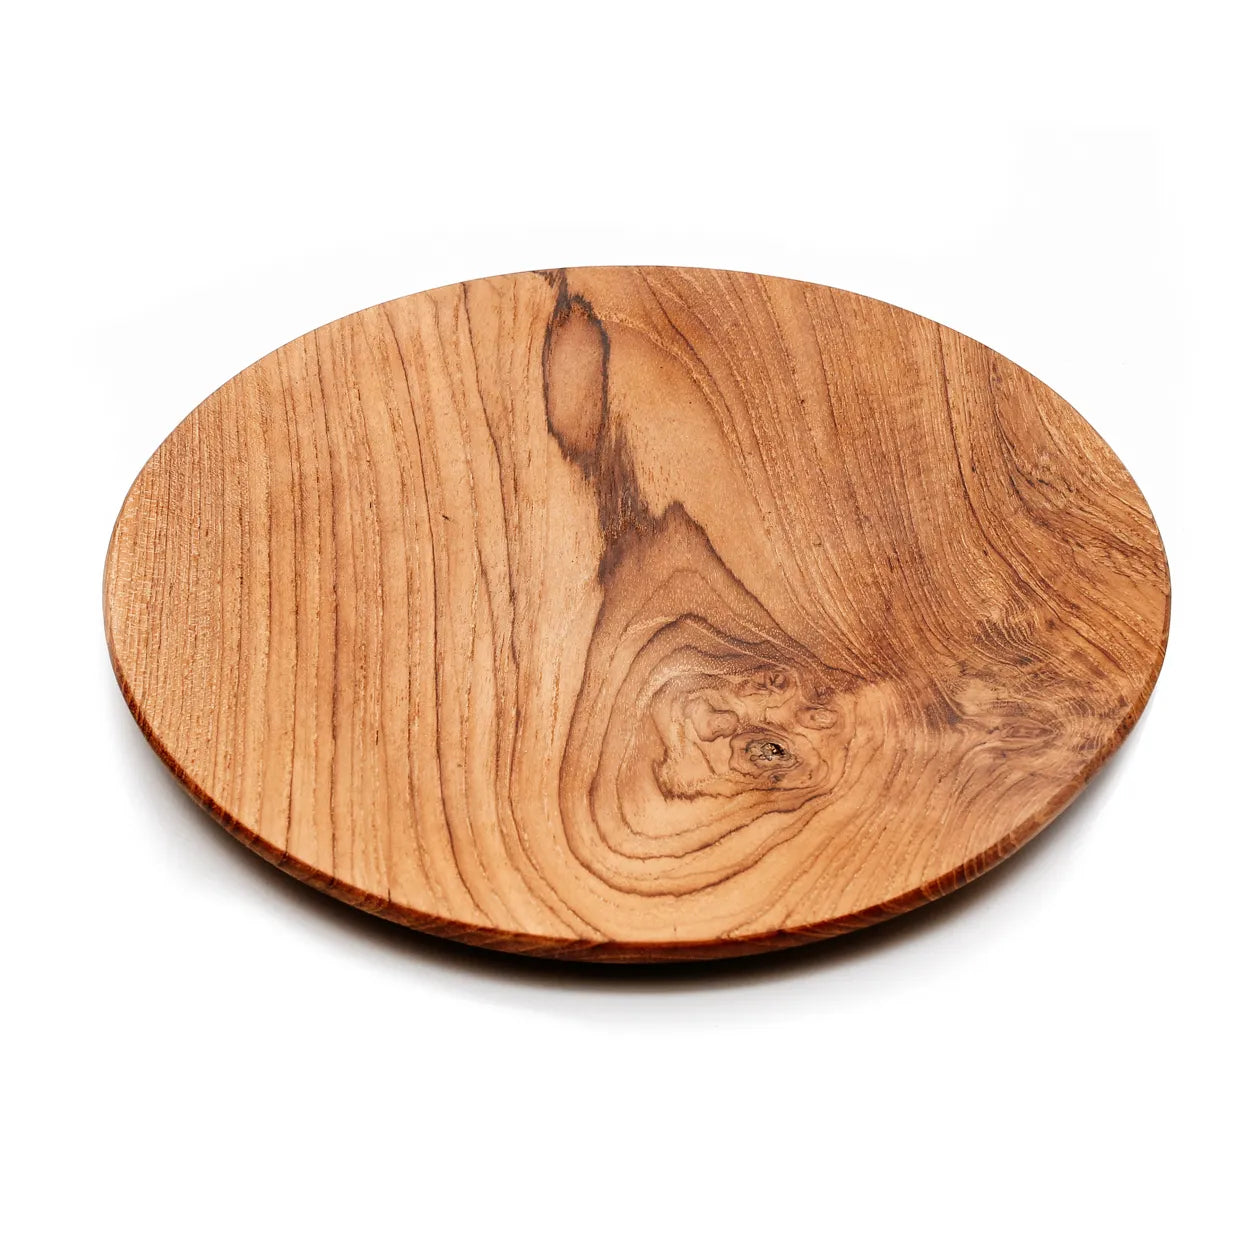 Cazorla Wood Charm Plate - Teak Wood Serving Plate